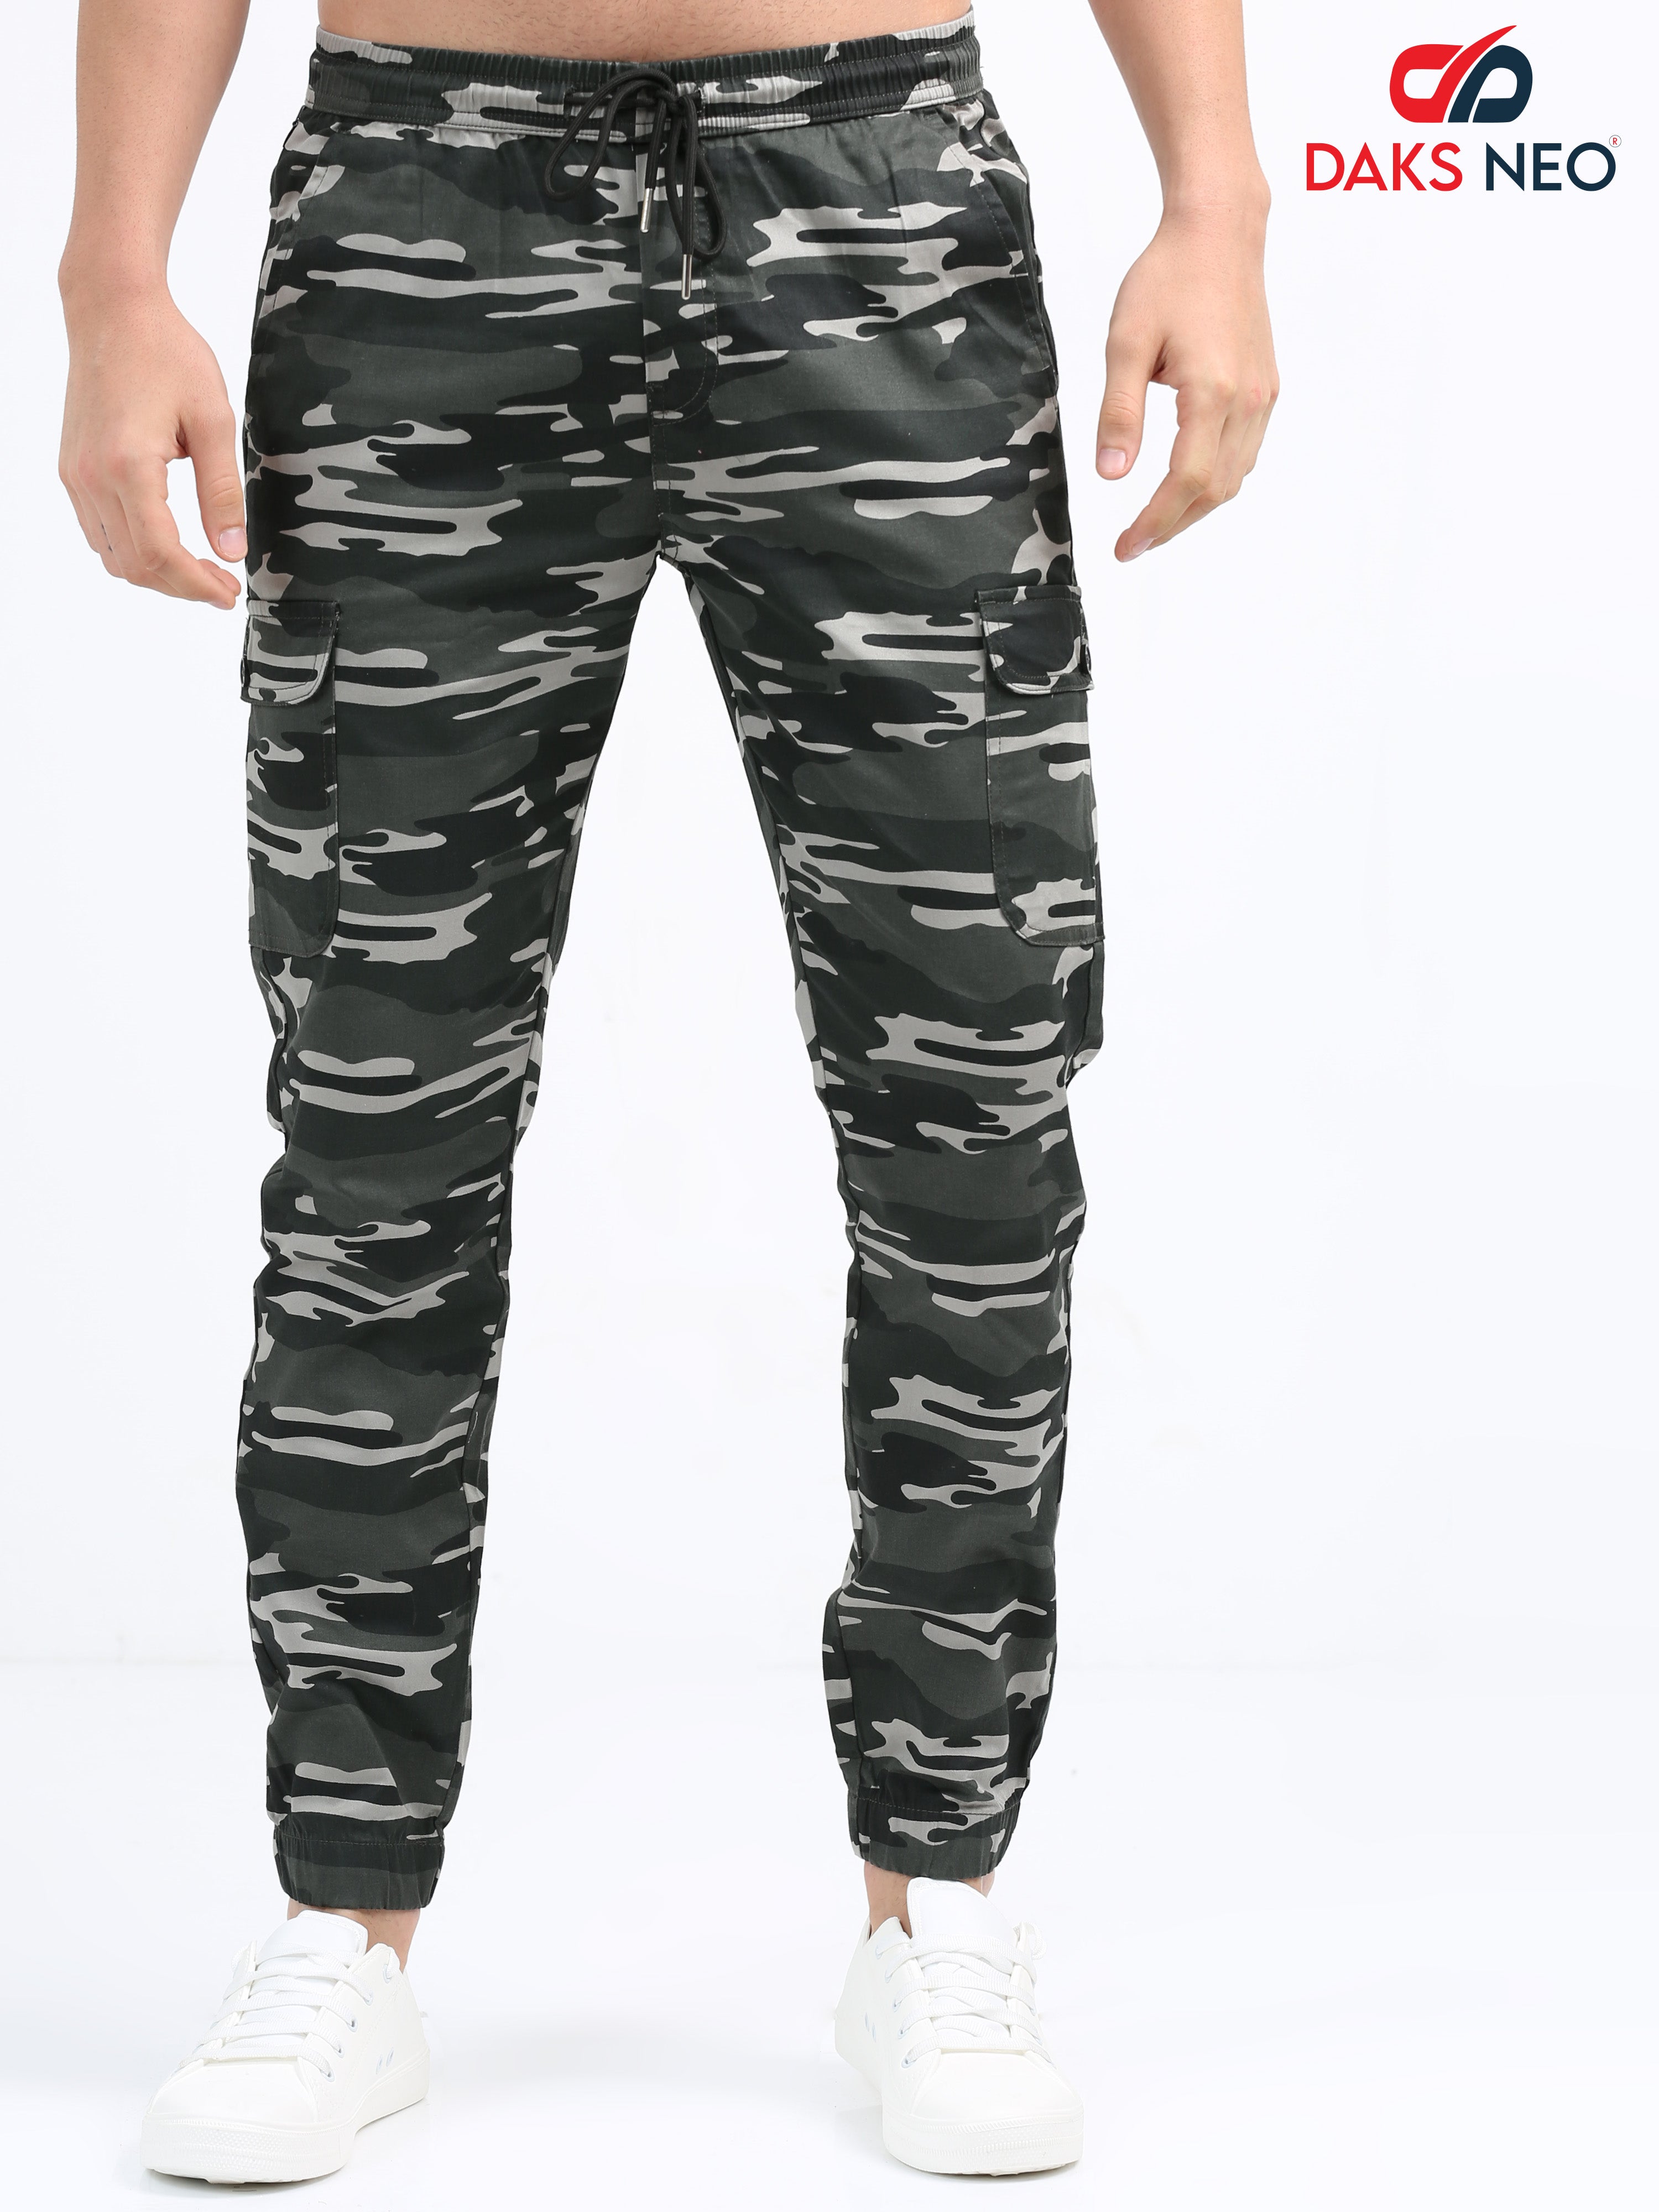 Women's Camouflage Pants, कैमॉफ्लाज ट्राउजर - Ramshiv Exports, Coimbatore |  ID: 25918838573